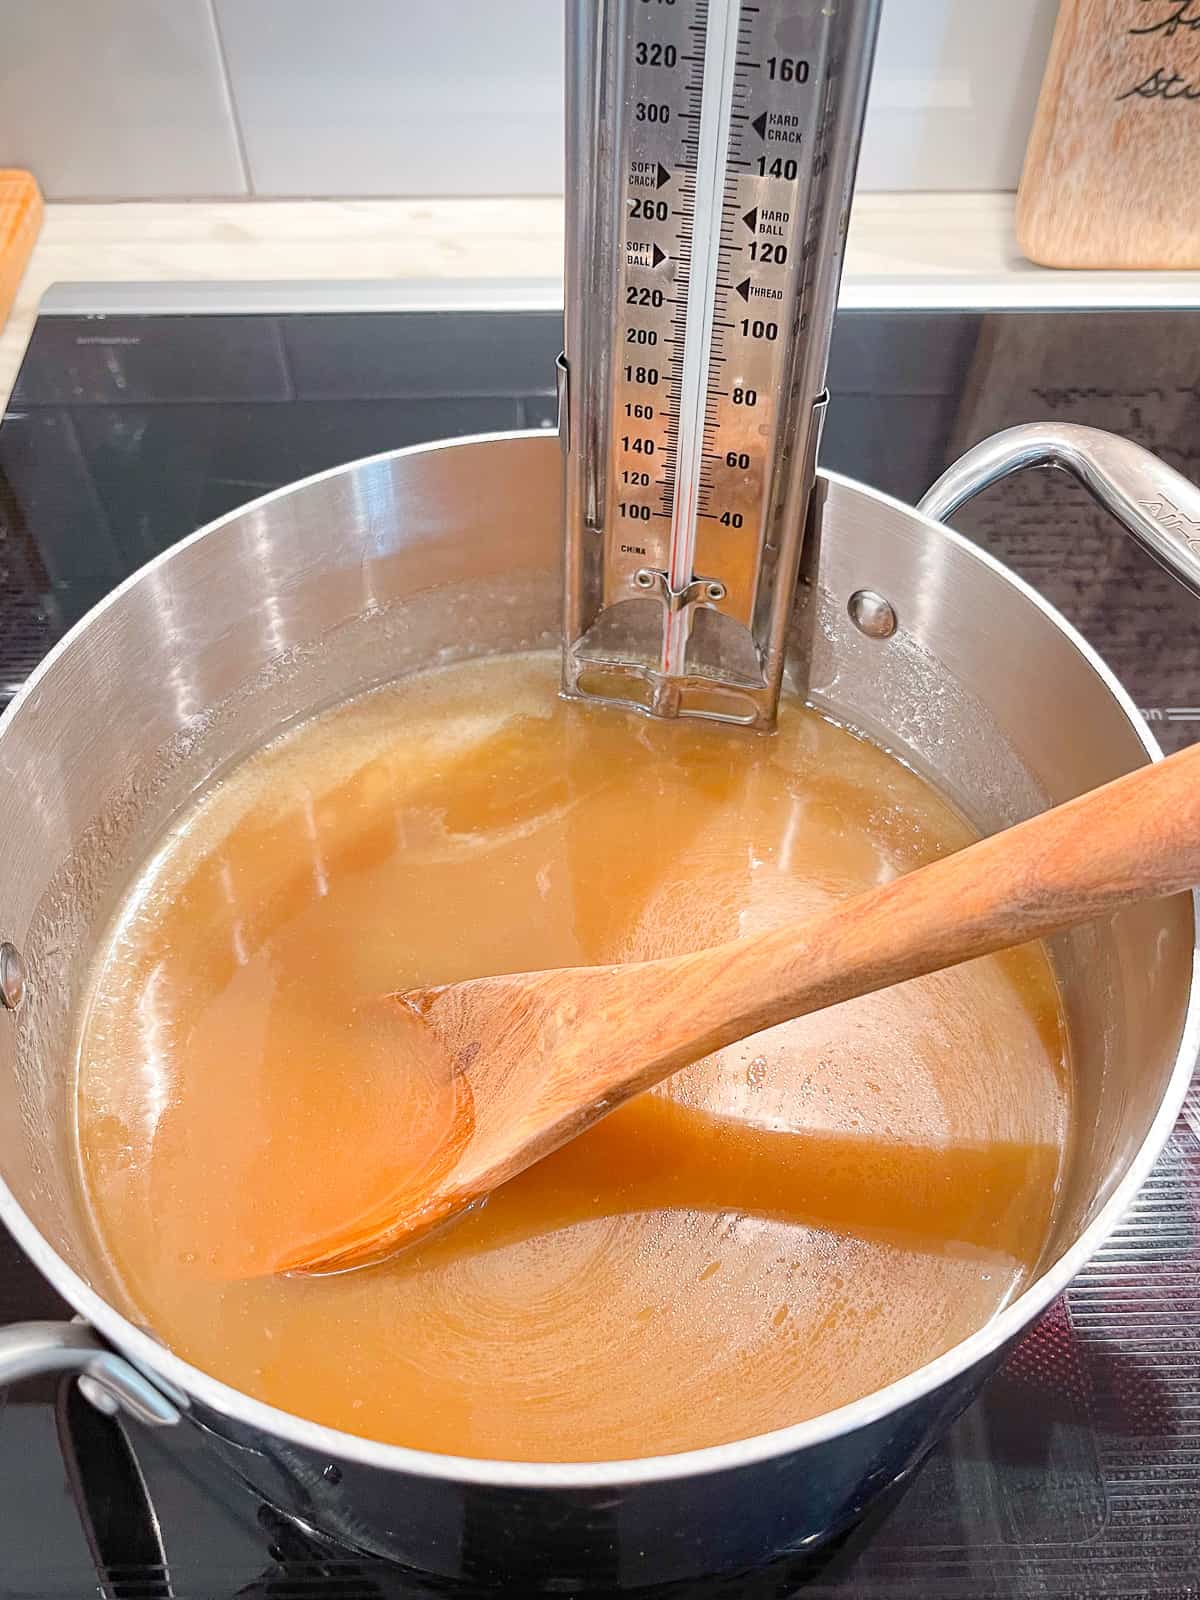 The caramel mixture at 120 degrees.